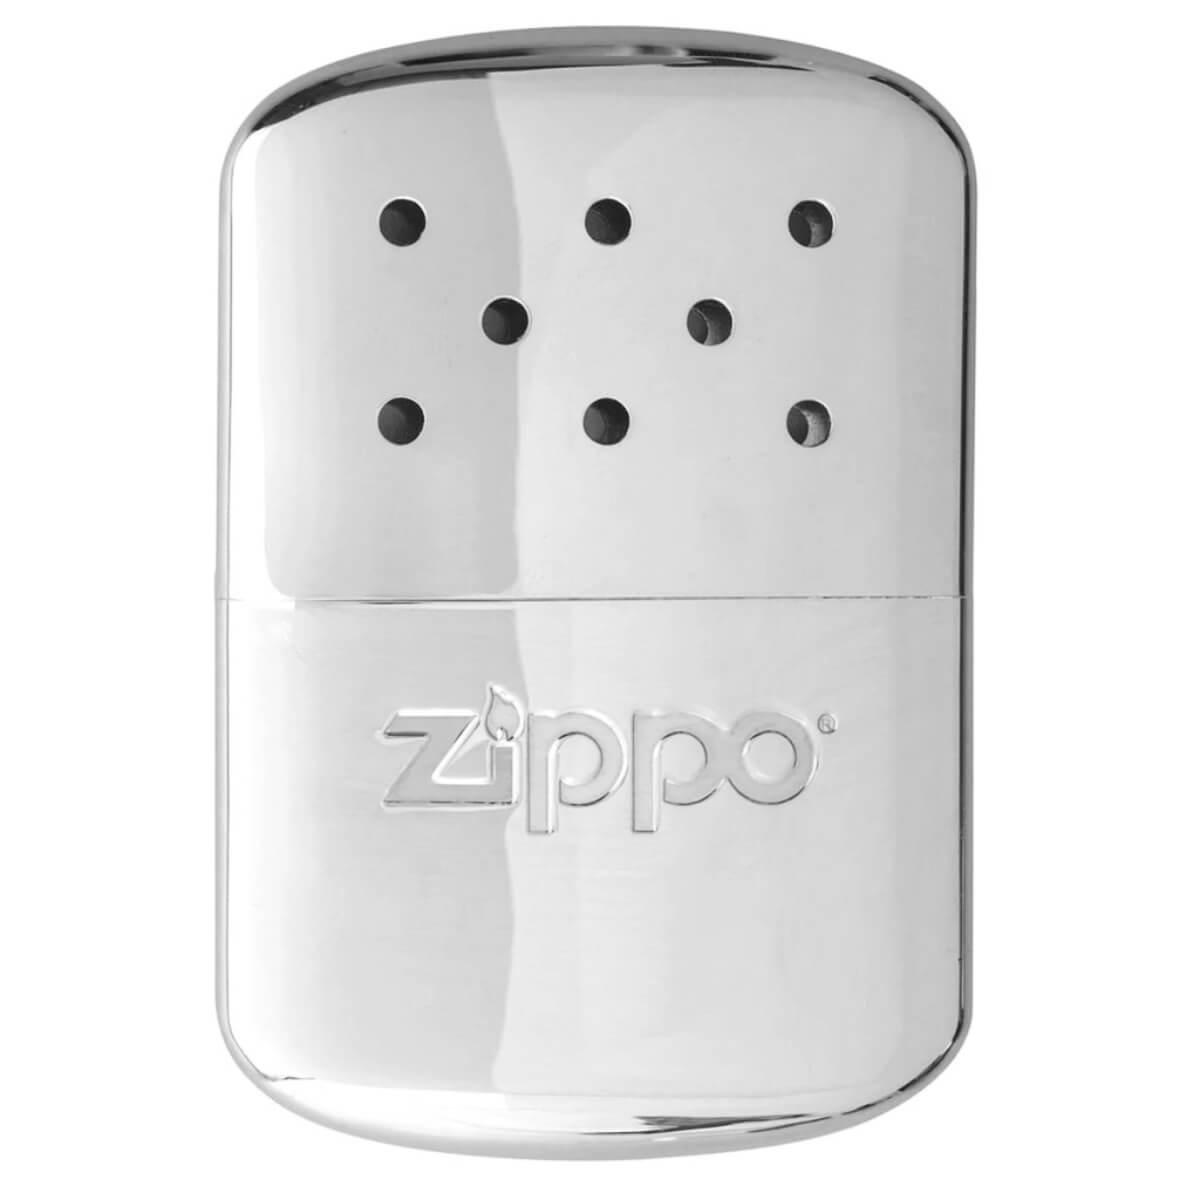 Zippo 12-Hour Refillable Hand Warmer - Chrome